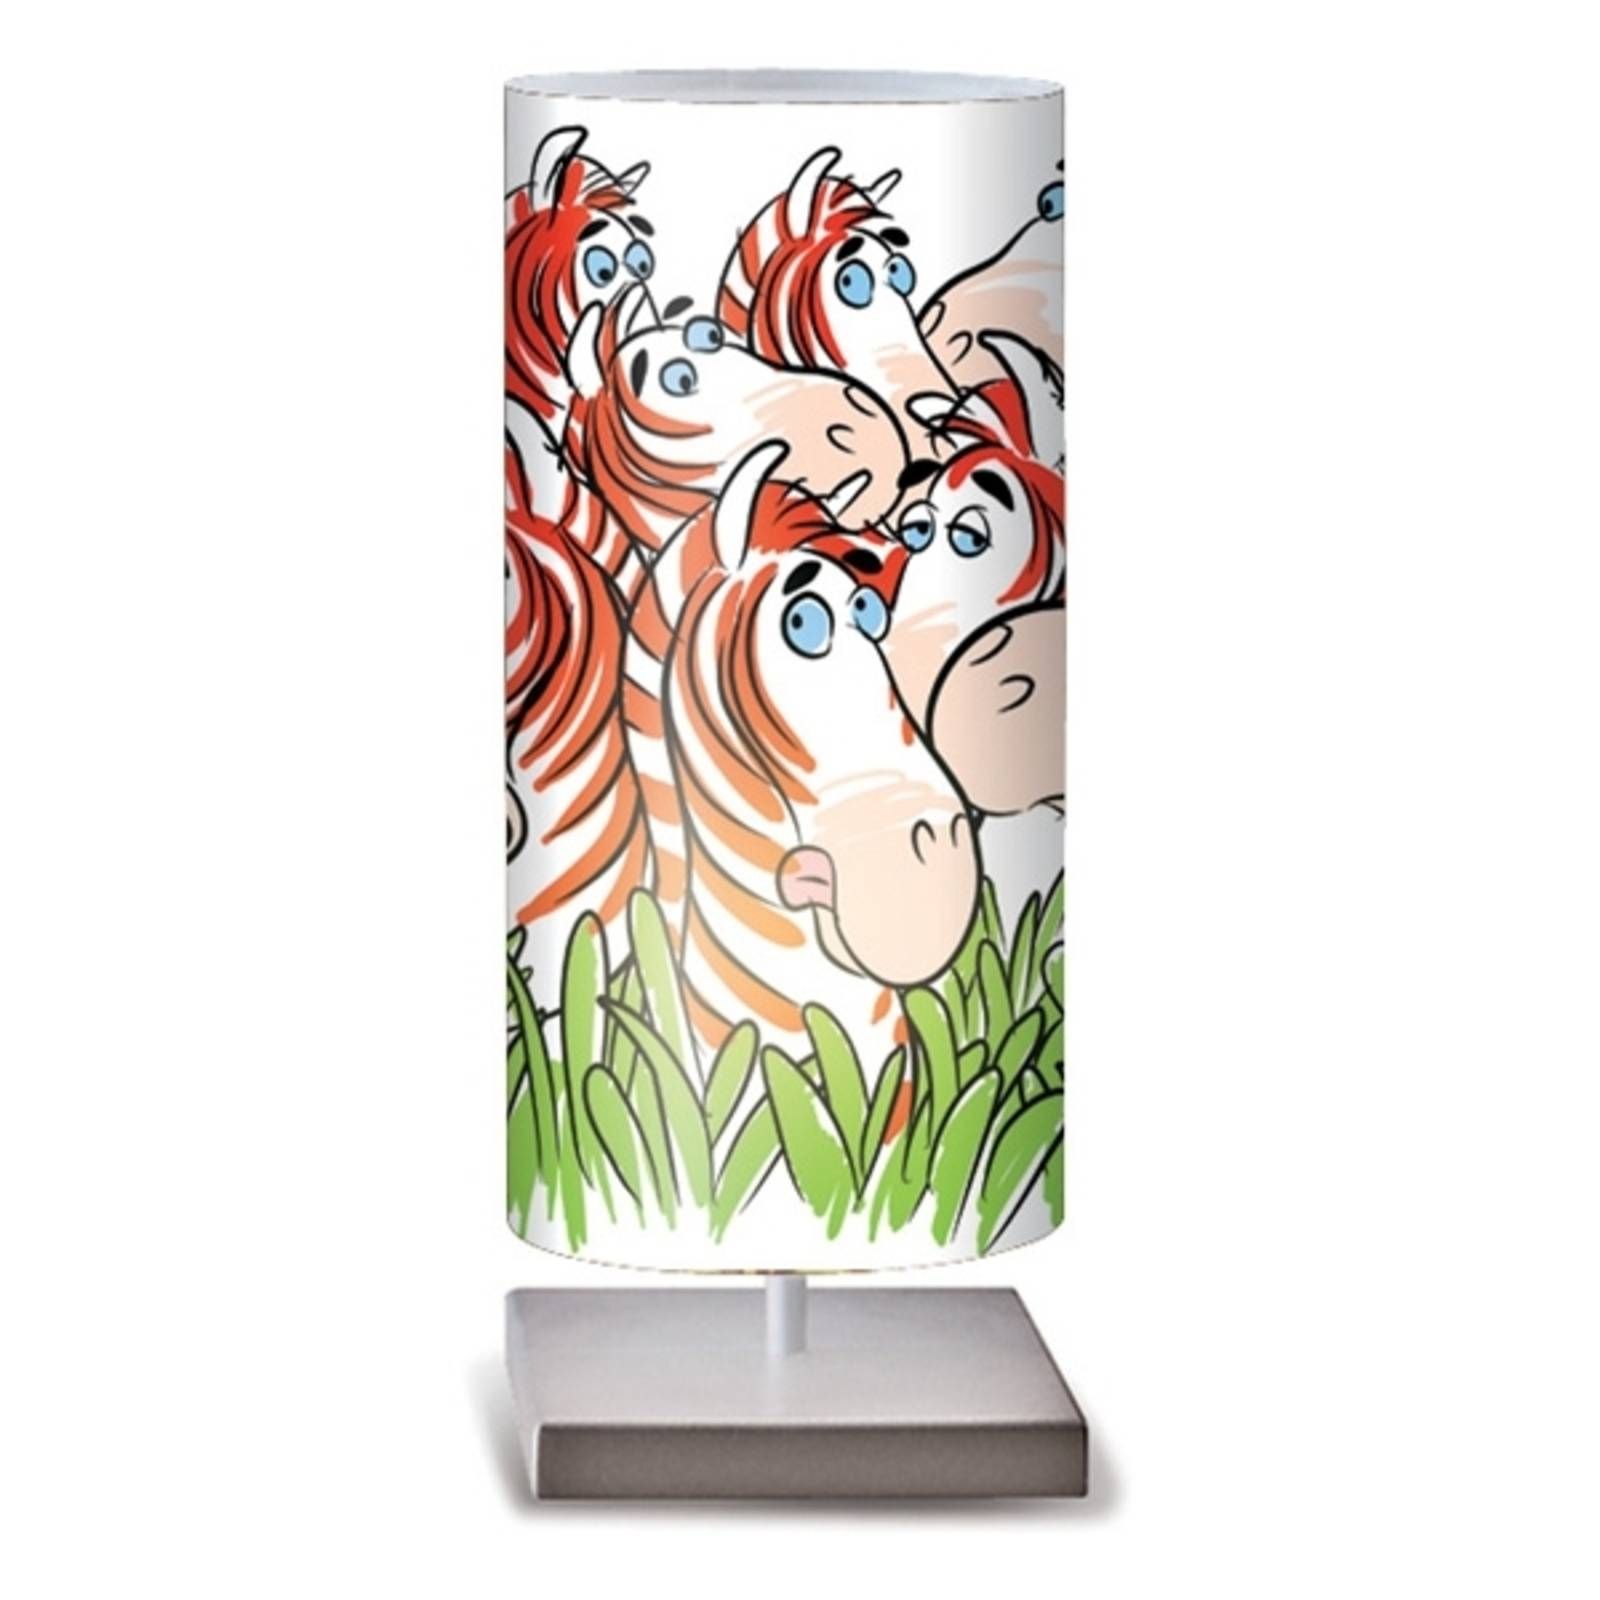 Artempo Italia Zebra stolná lampa veselé farby do detskej izby, Detská izba, plast, E27, 25W, P: 16 cm, L: 16 cm, K: 39cm